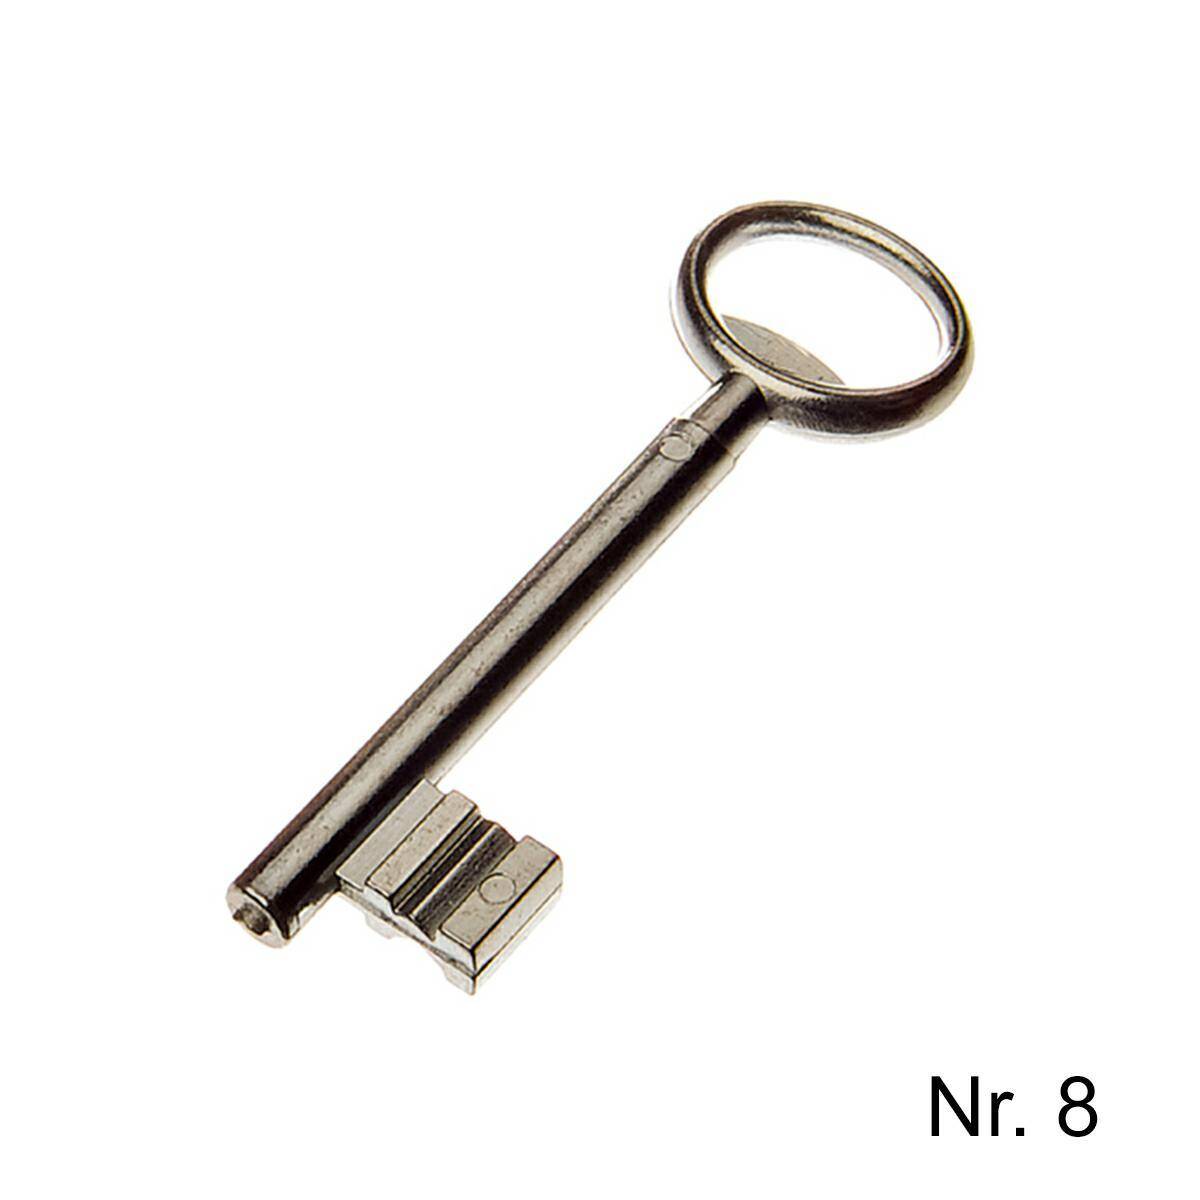 Cast key Jania for the lock - No. 8